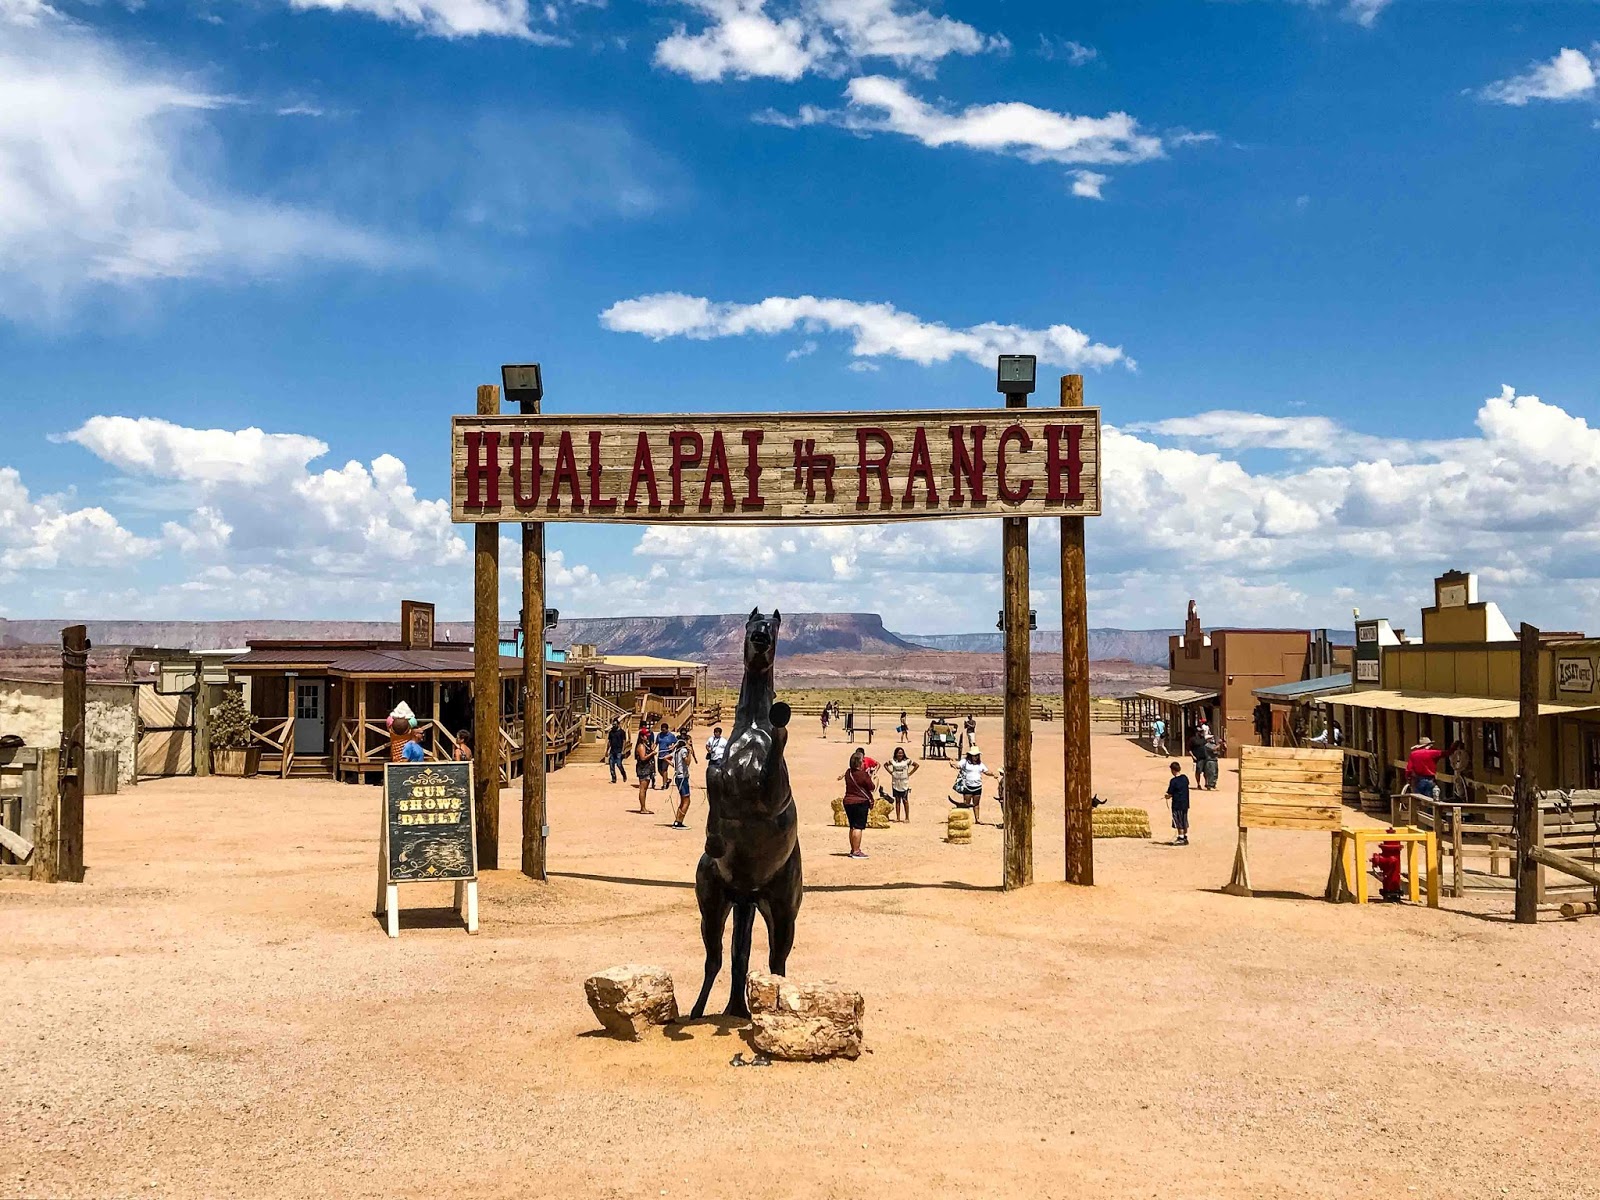 Hualapai Ranch - Hualapai Village at Grand Canyon West Rim Tours